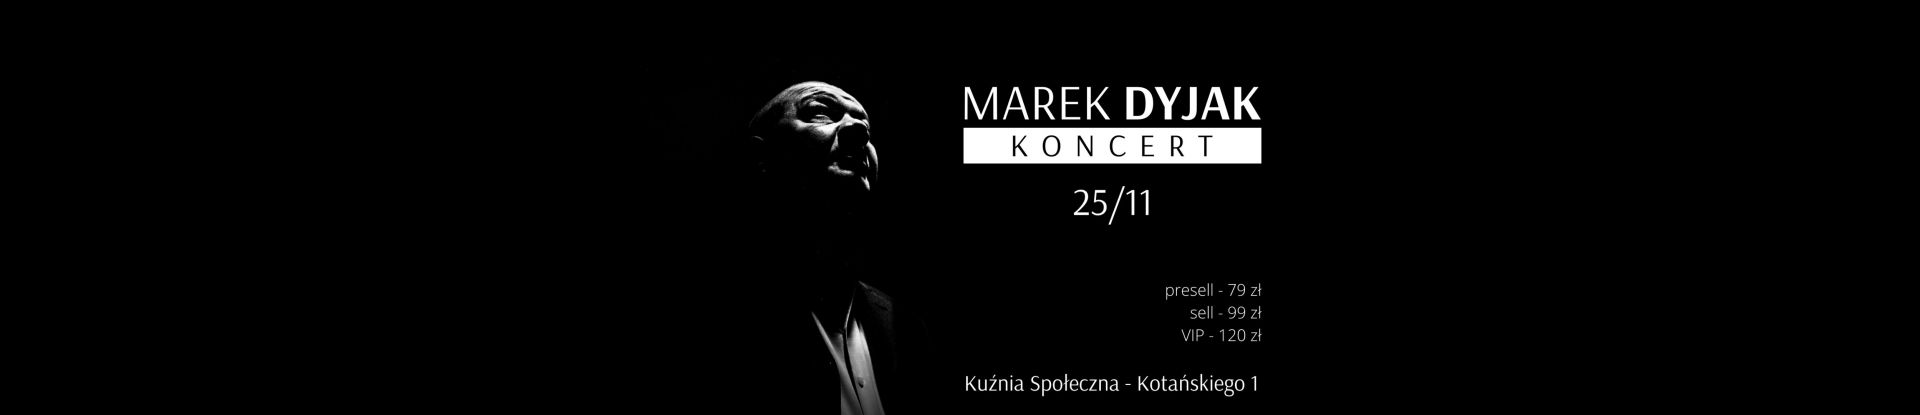 Marek Dyjak - KONCERT NOWY TERMIN 